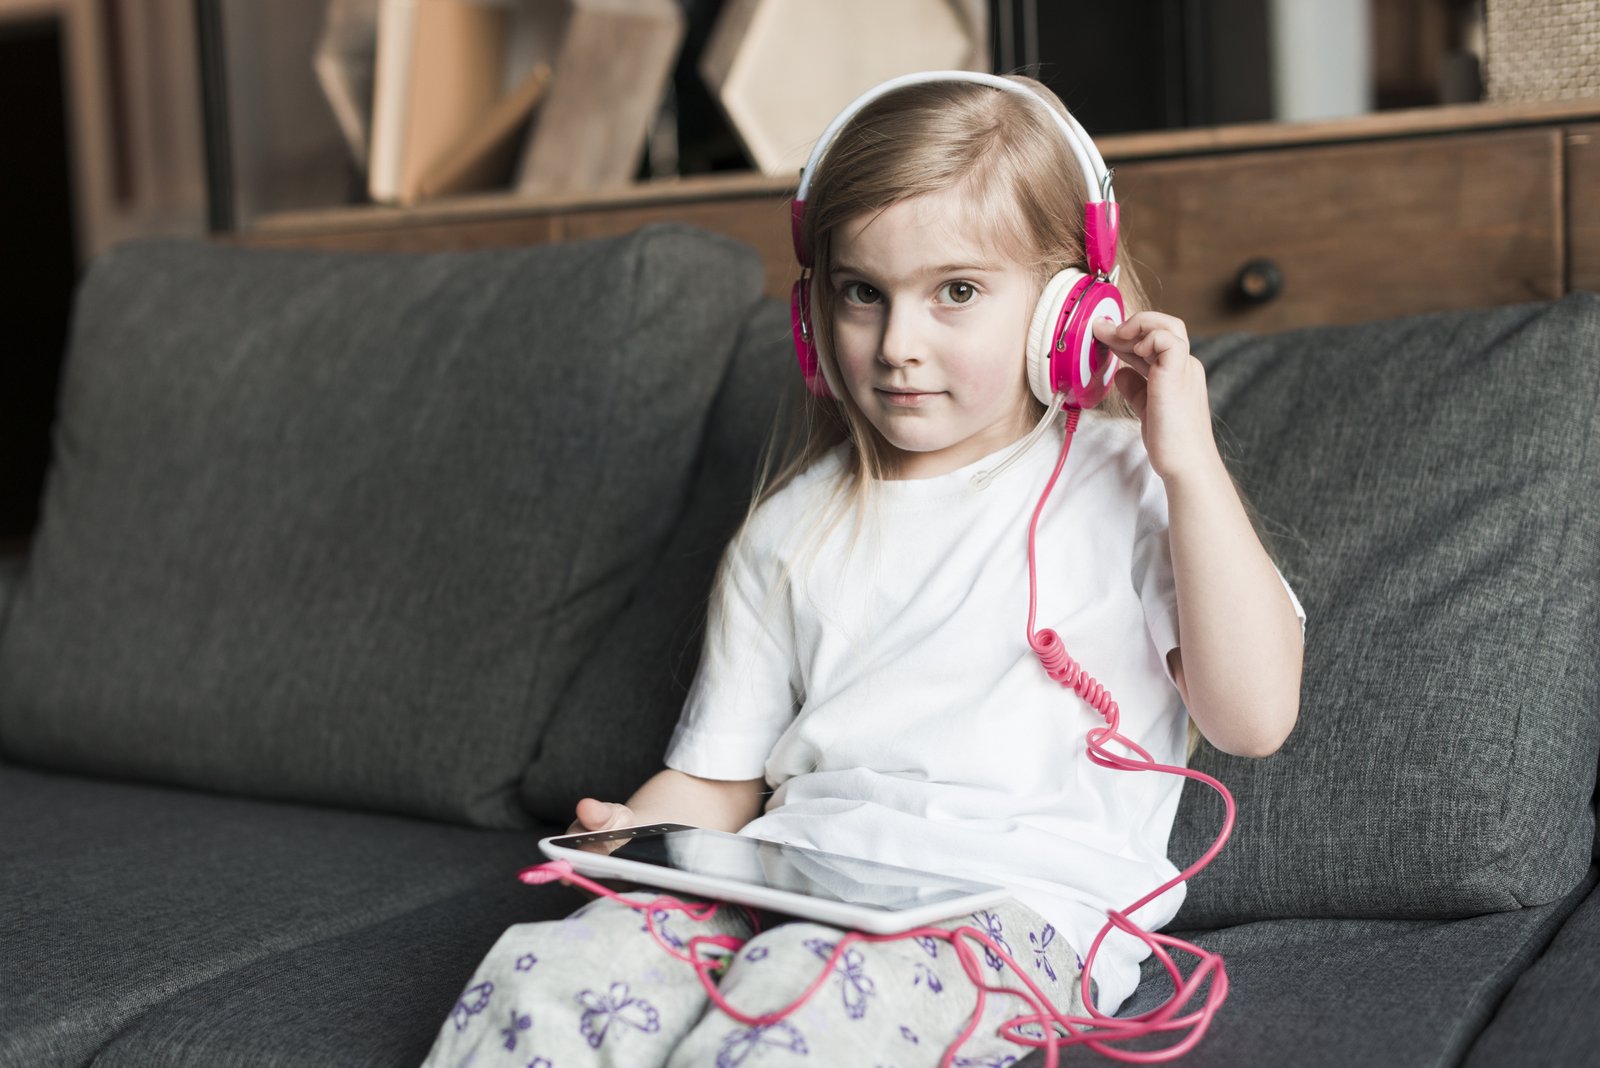 Survey Reveals Increasing Headphone Usage Among Children; Experts Caution Parents On Health Risks